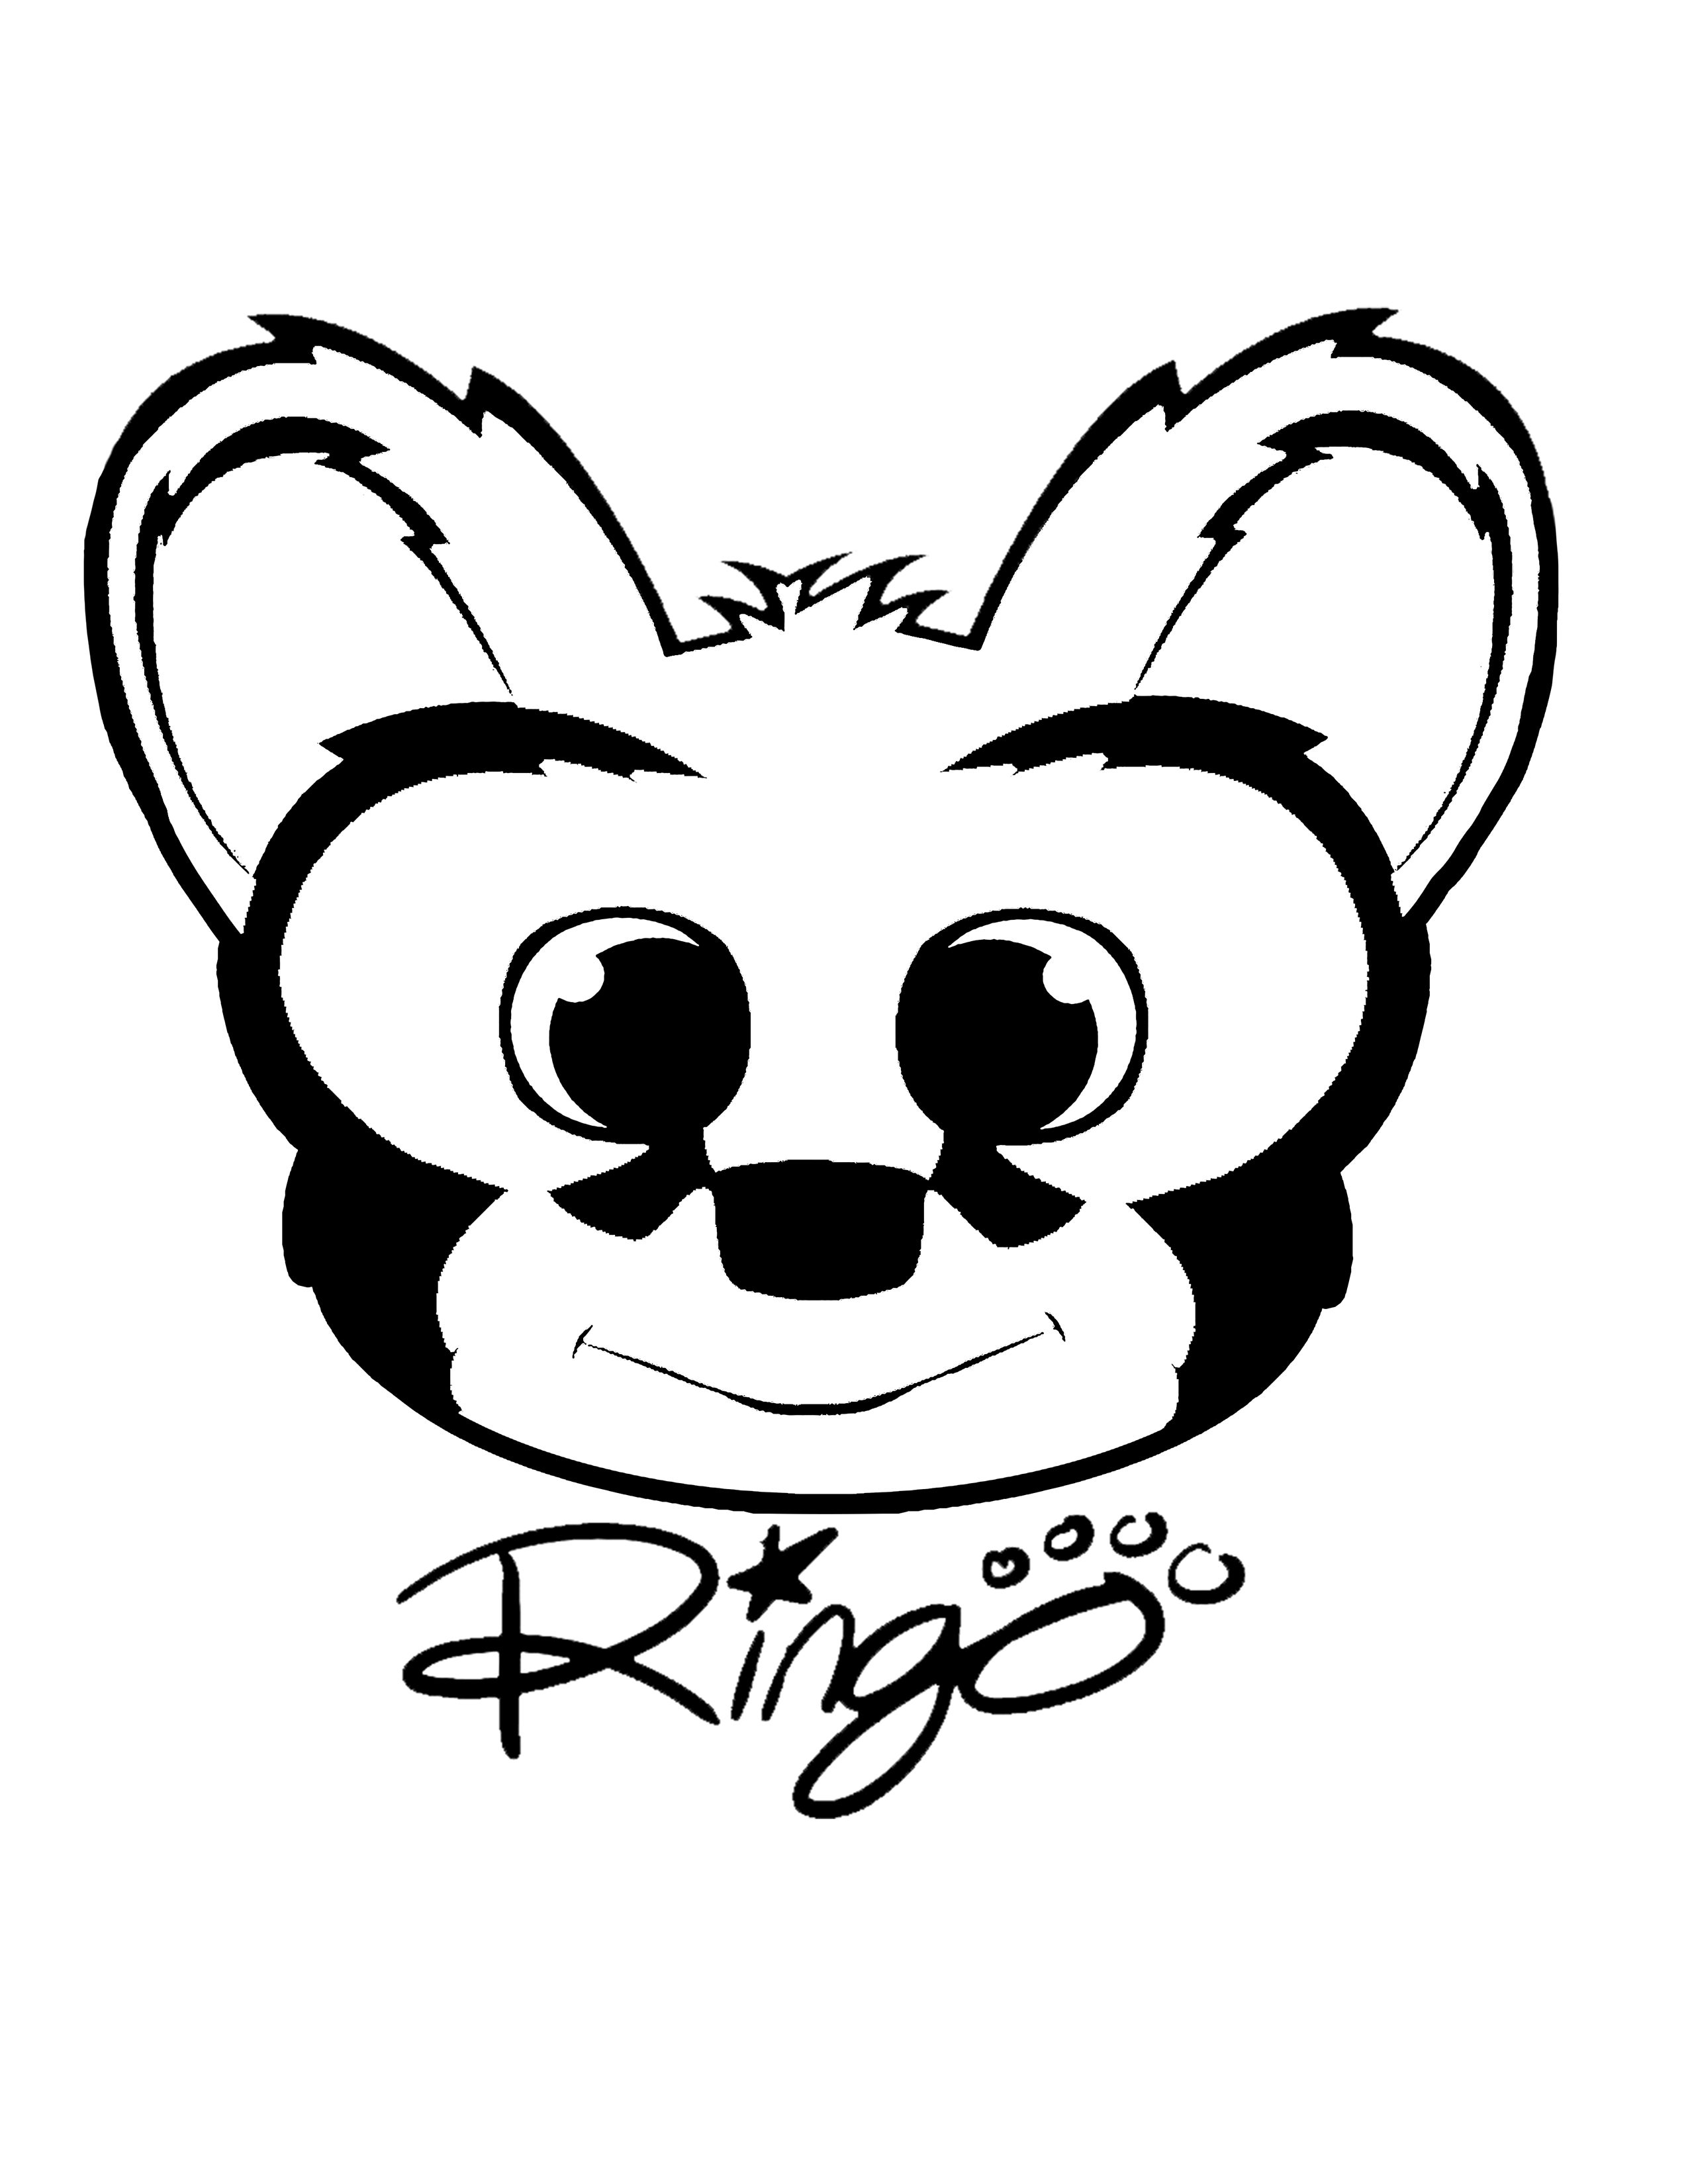 ColoringPage-RingoHead2.jpg